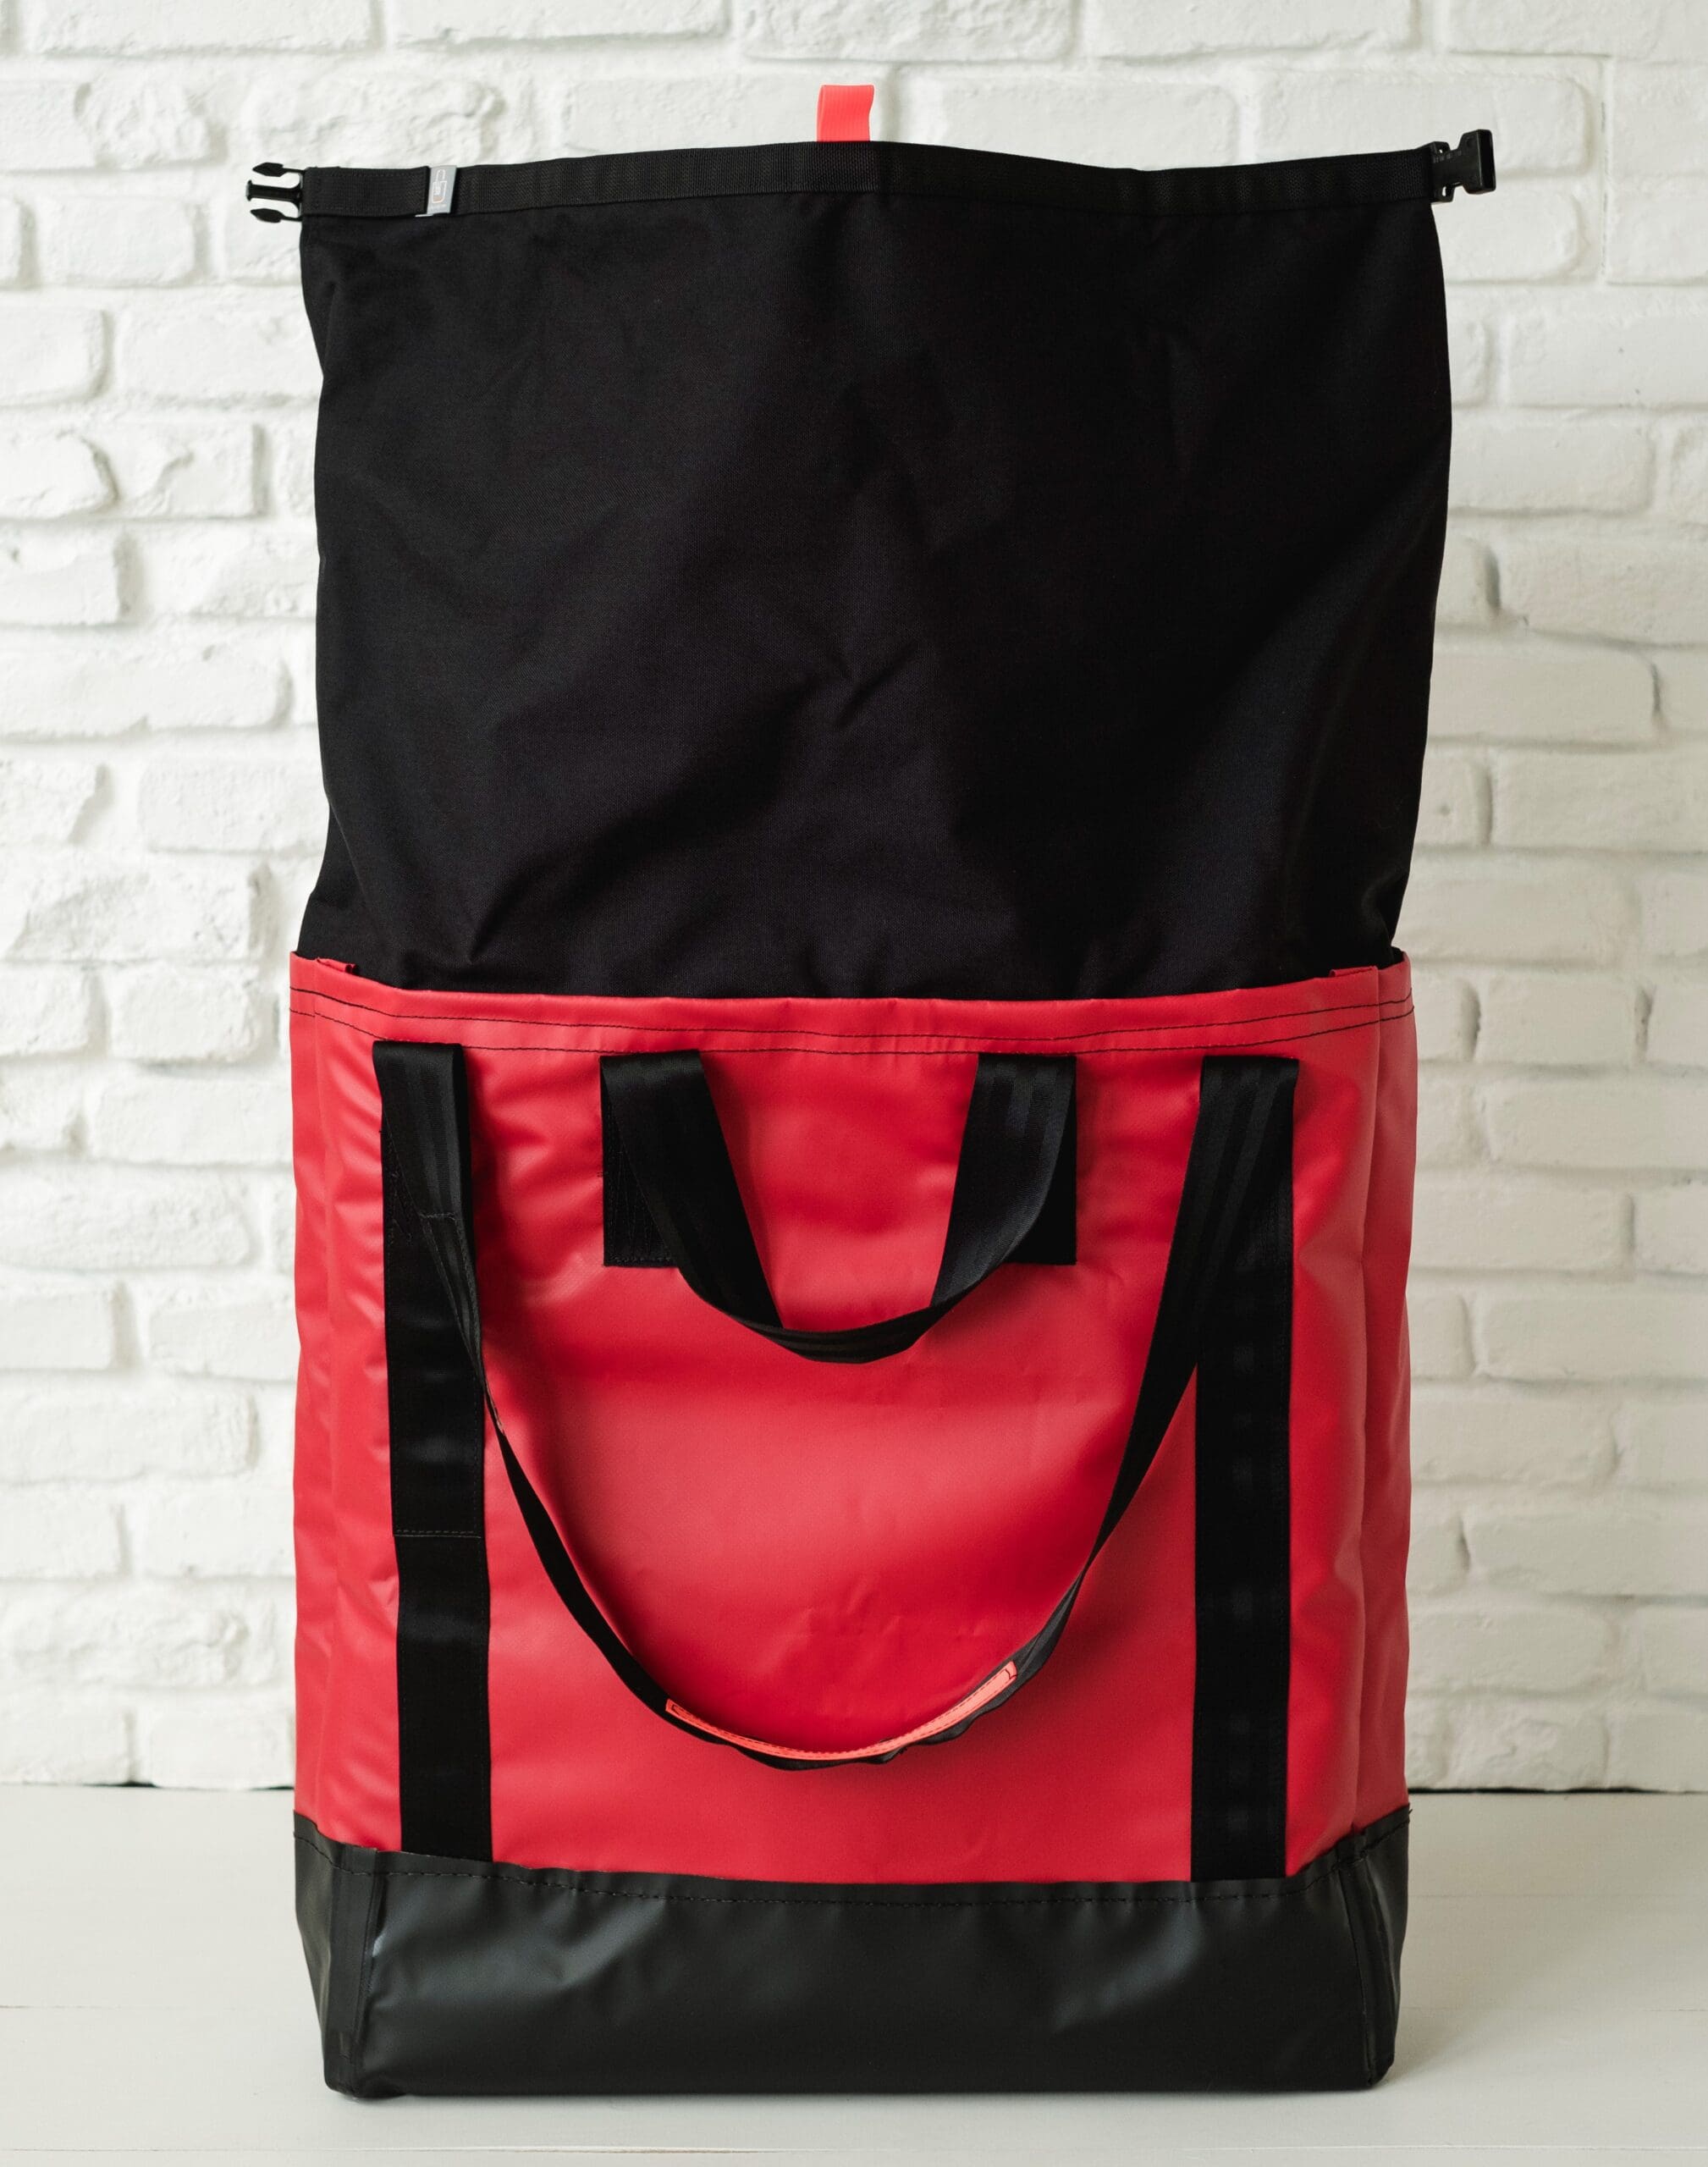 Bag closet facelift – Buy the goddamn bag